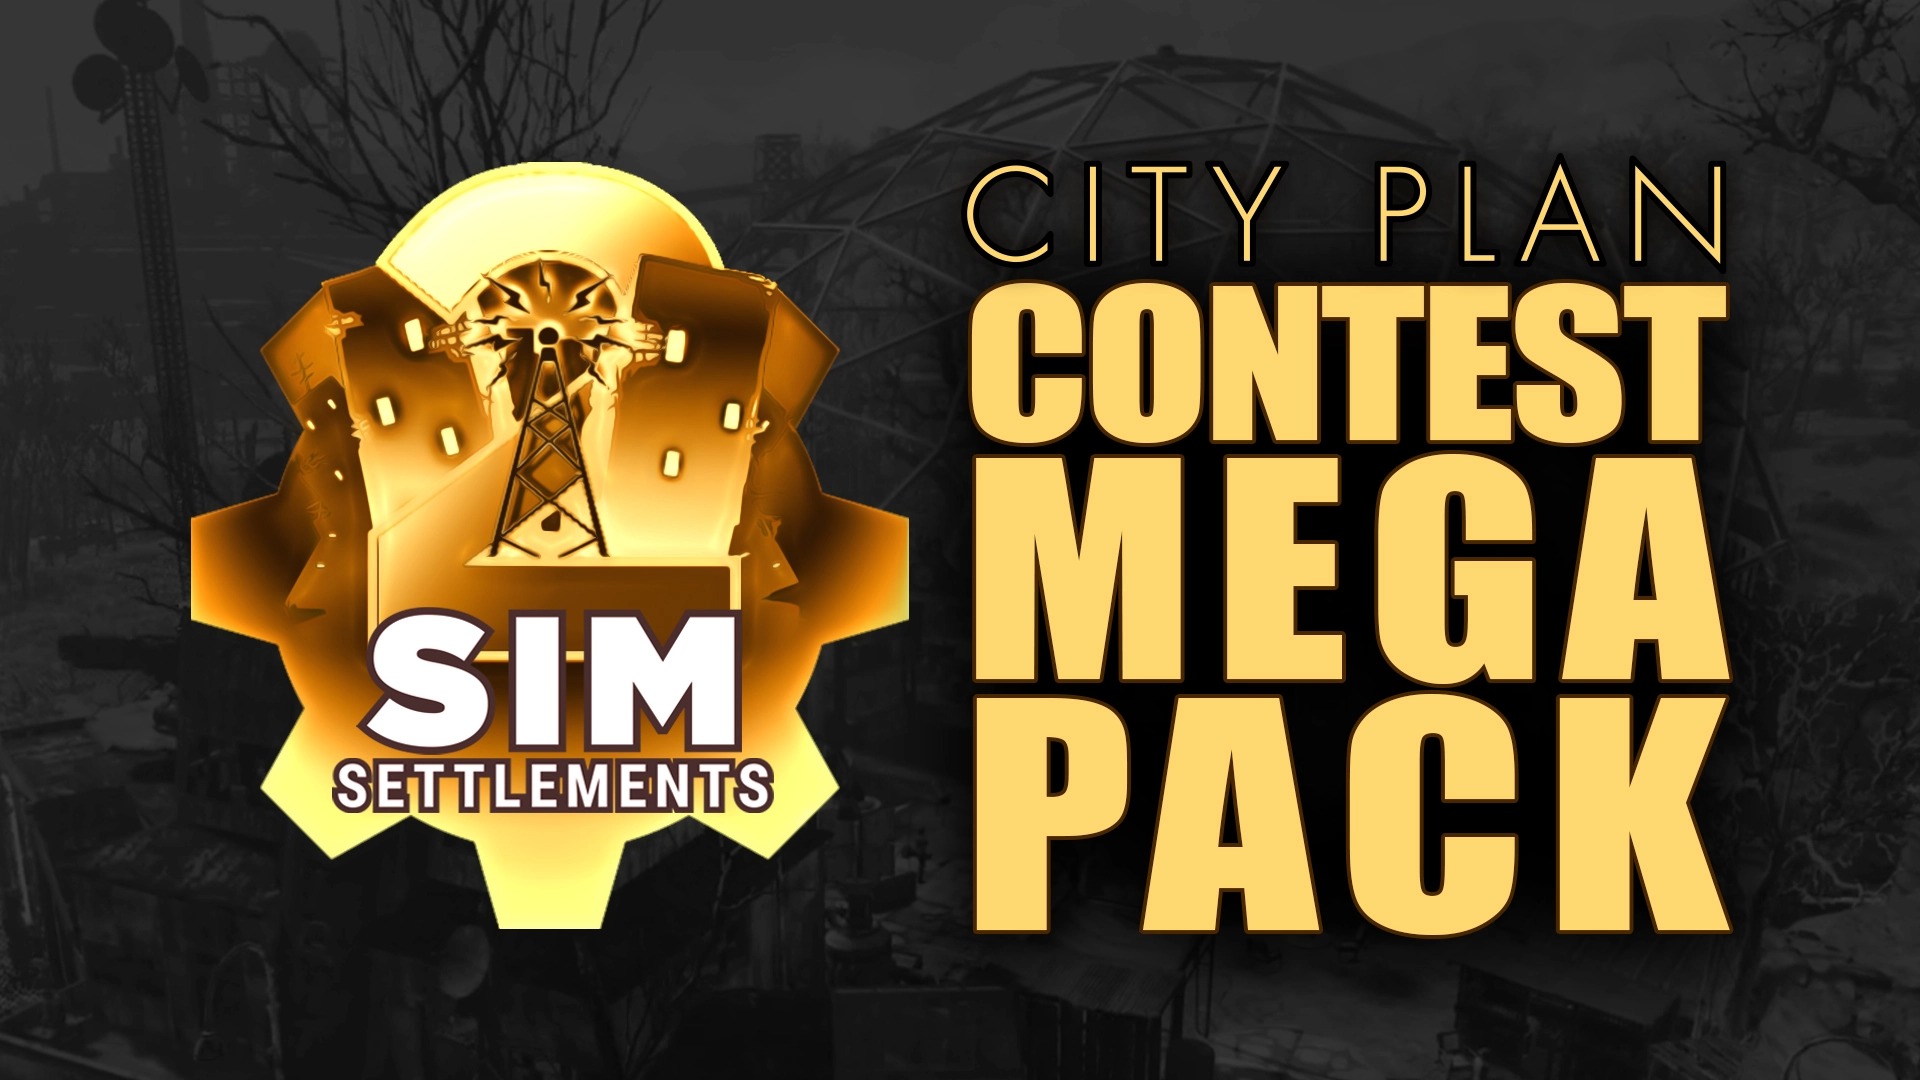 Sim settlements fallout 4 city plans фото 29